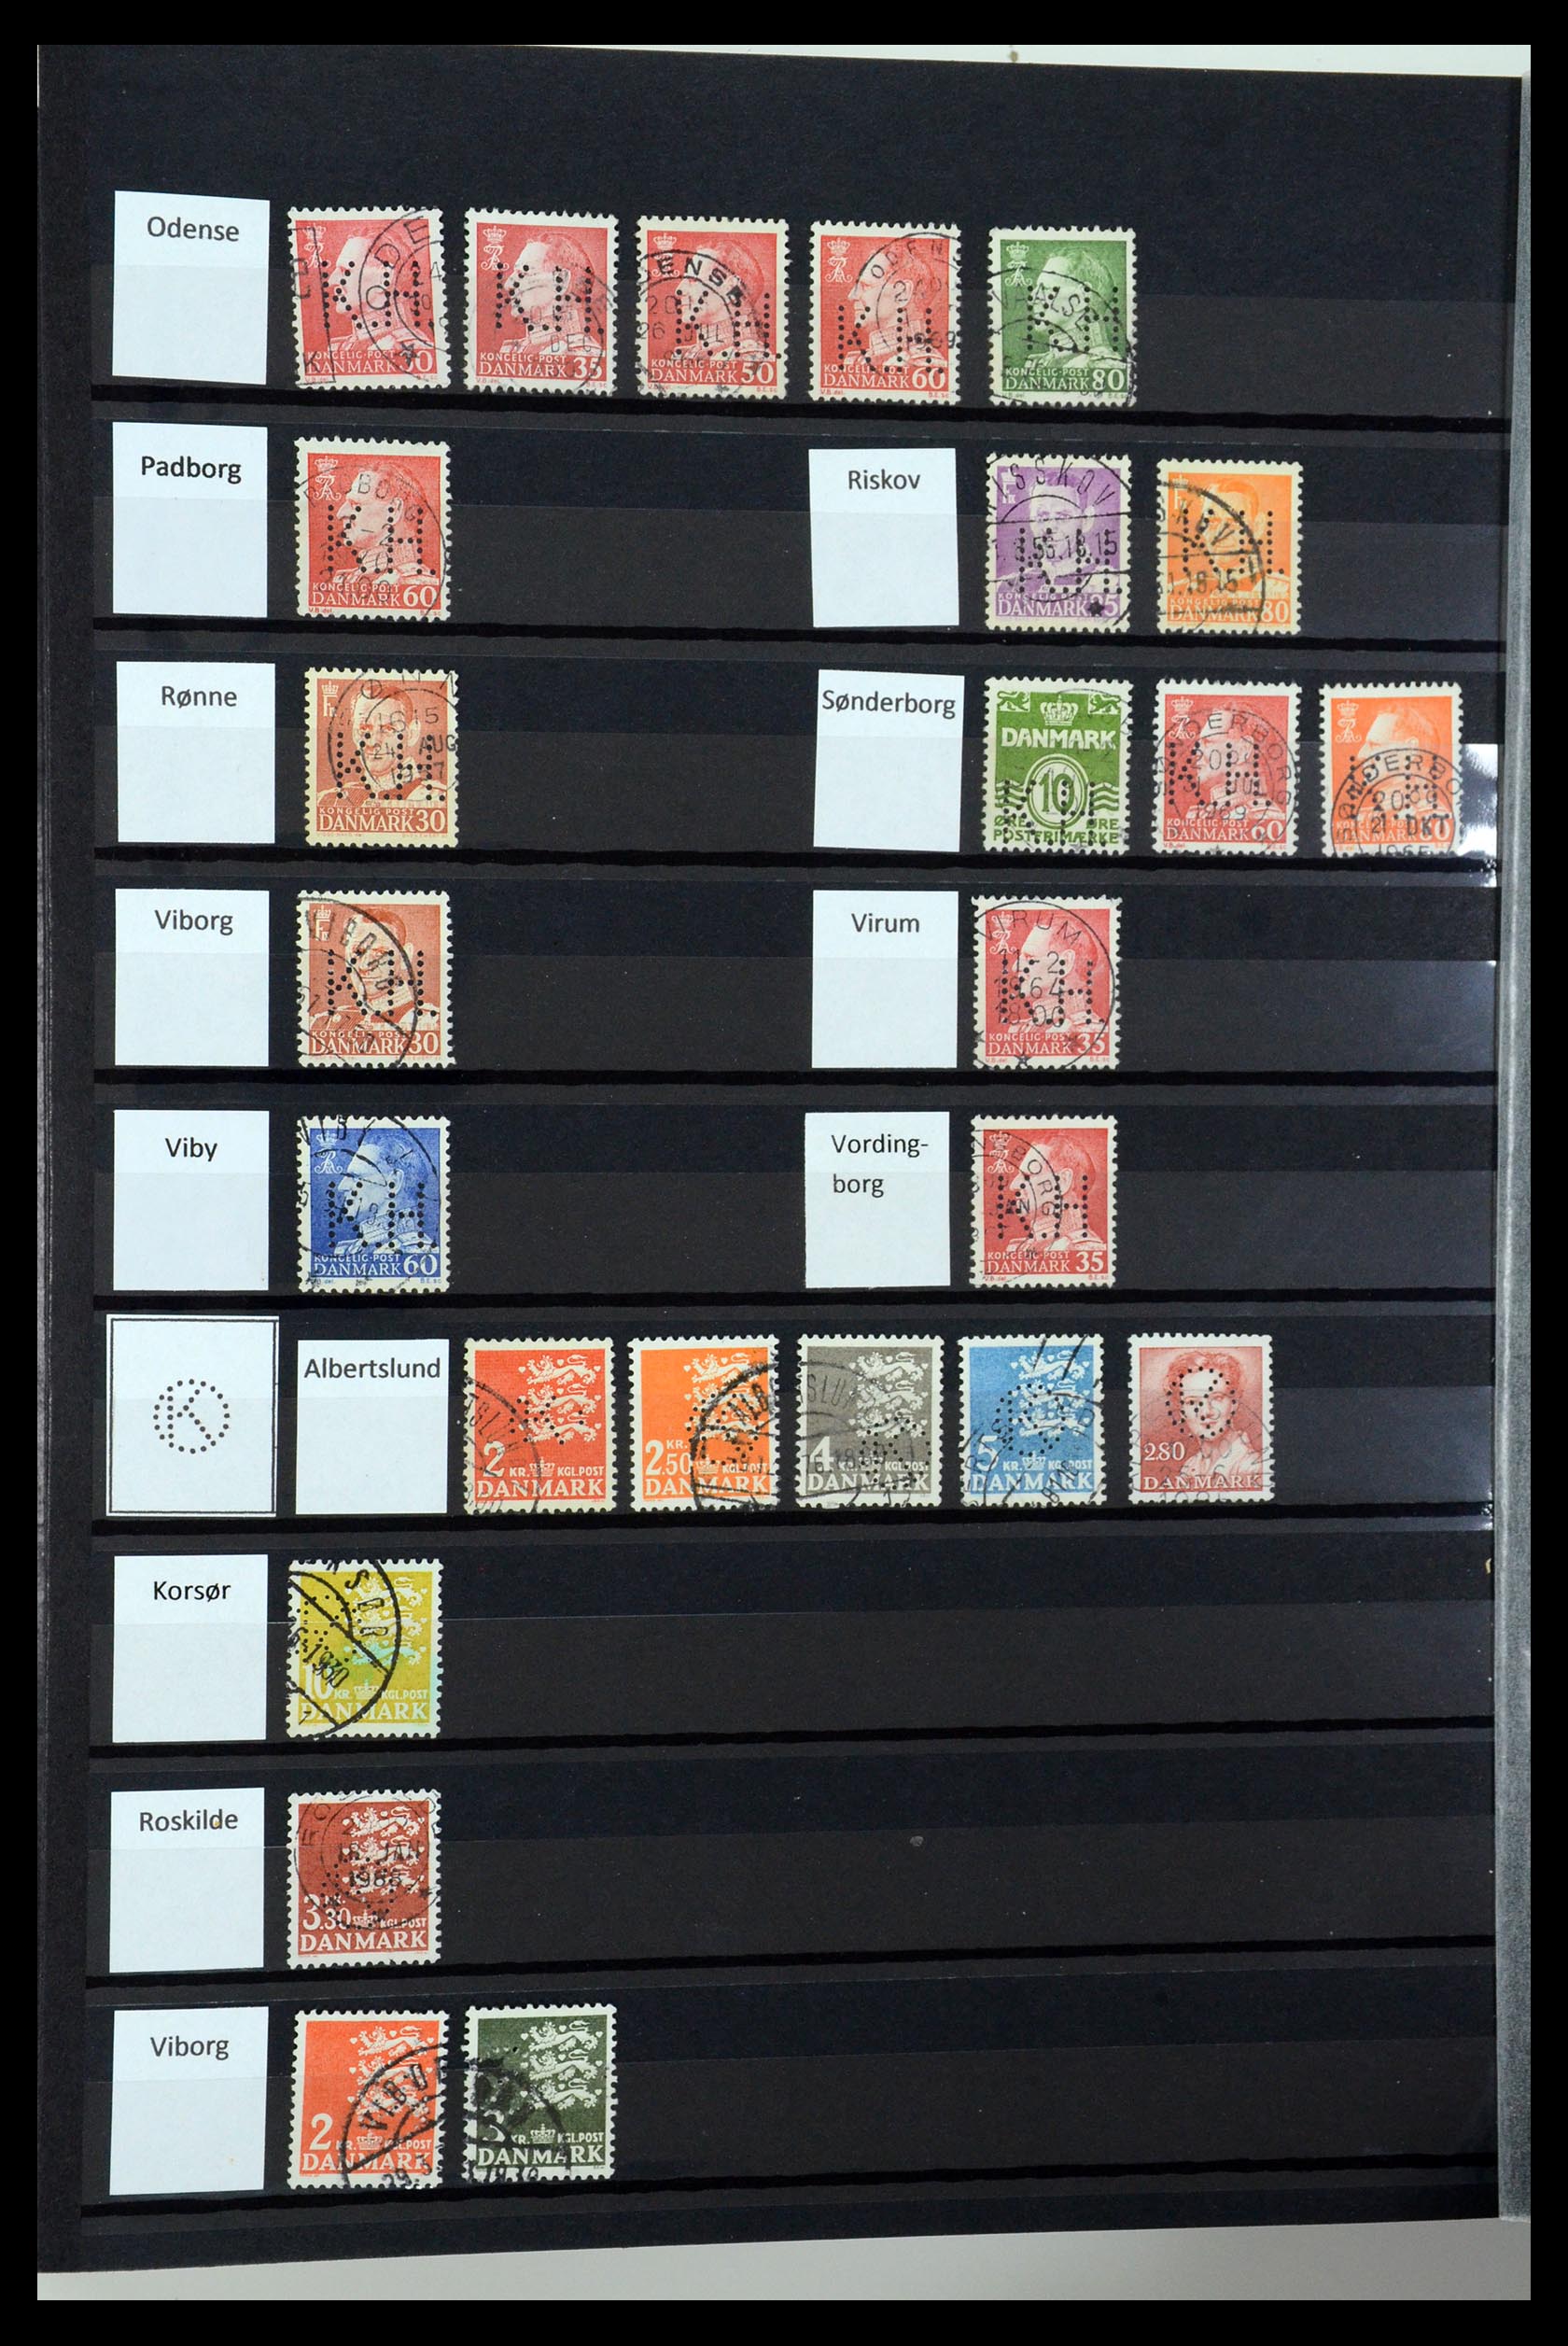 36396 085 - Stamp collection 36396 Denmark perfins.